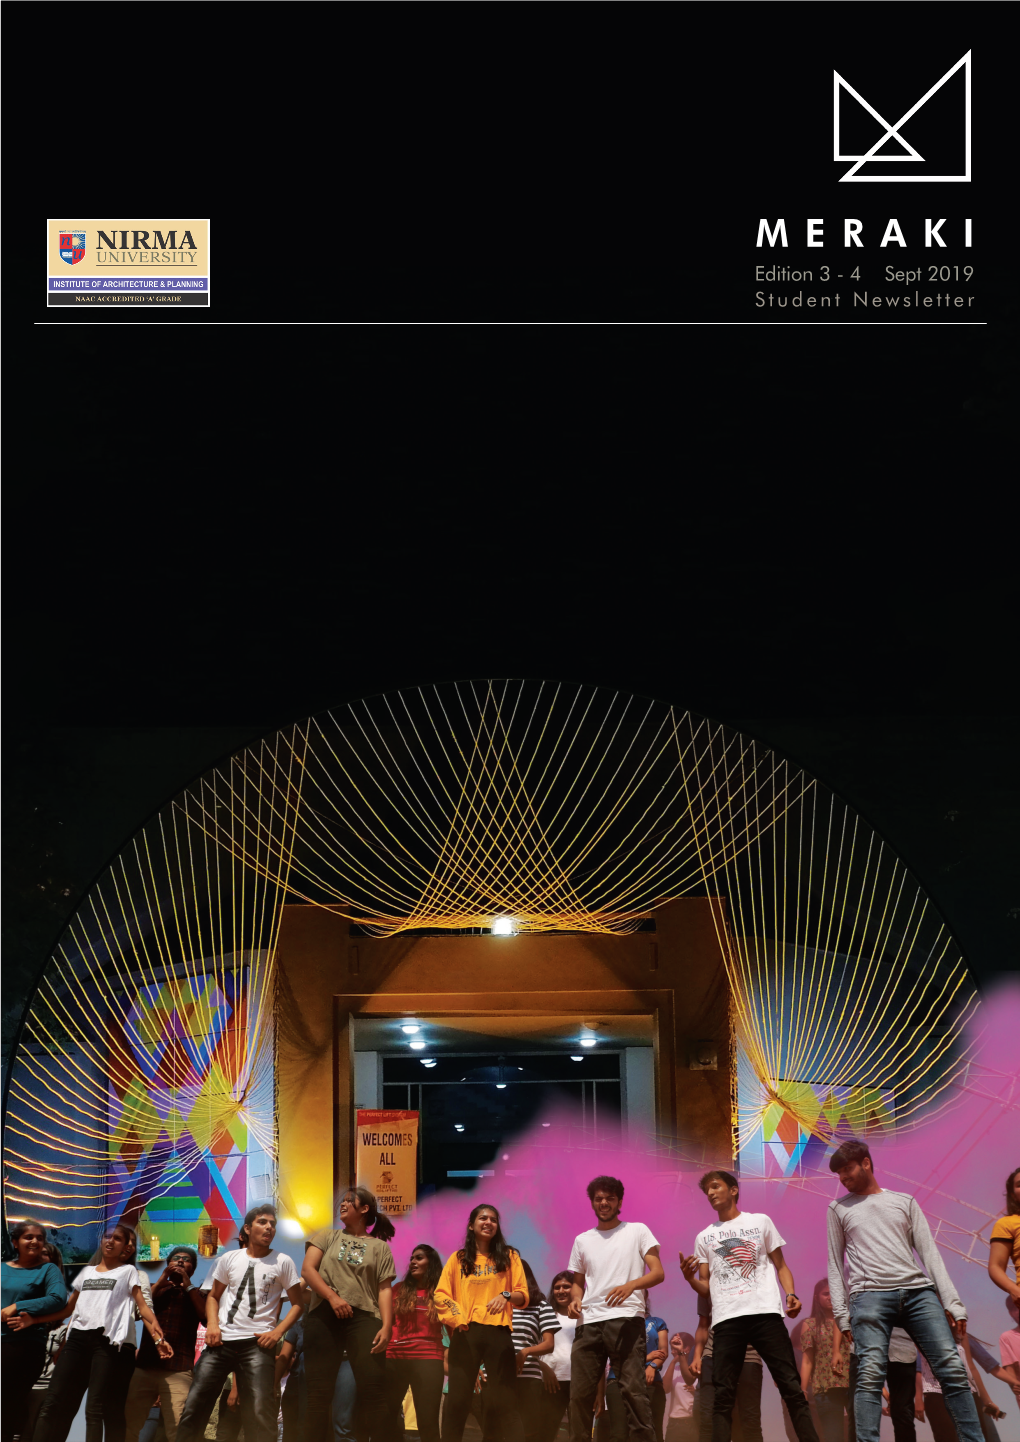 MERAKI Edition 3 - 4 Sept 2019 Student Newsletter Sep‘19 Meraki #3-4